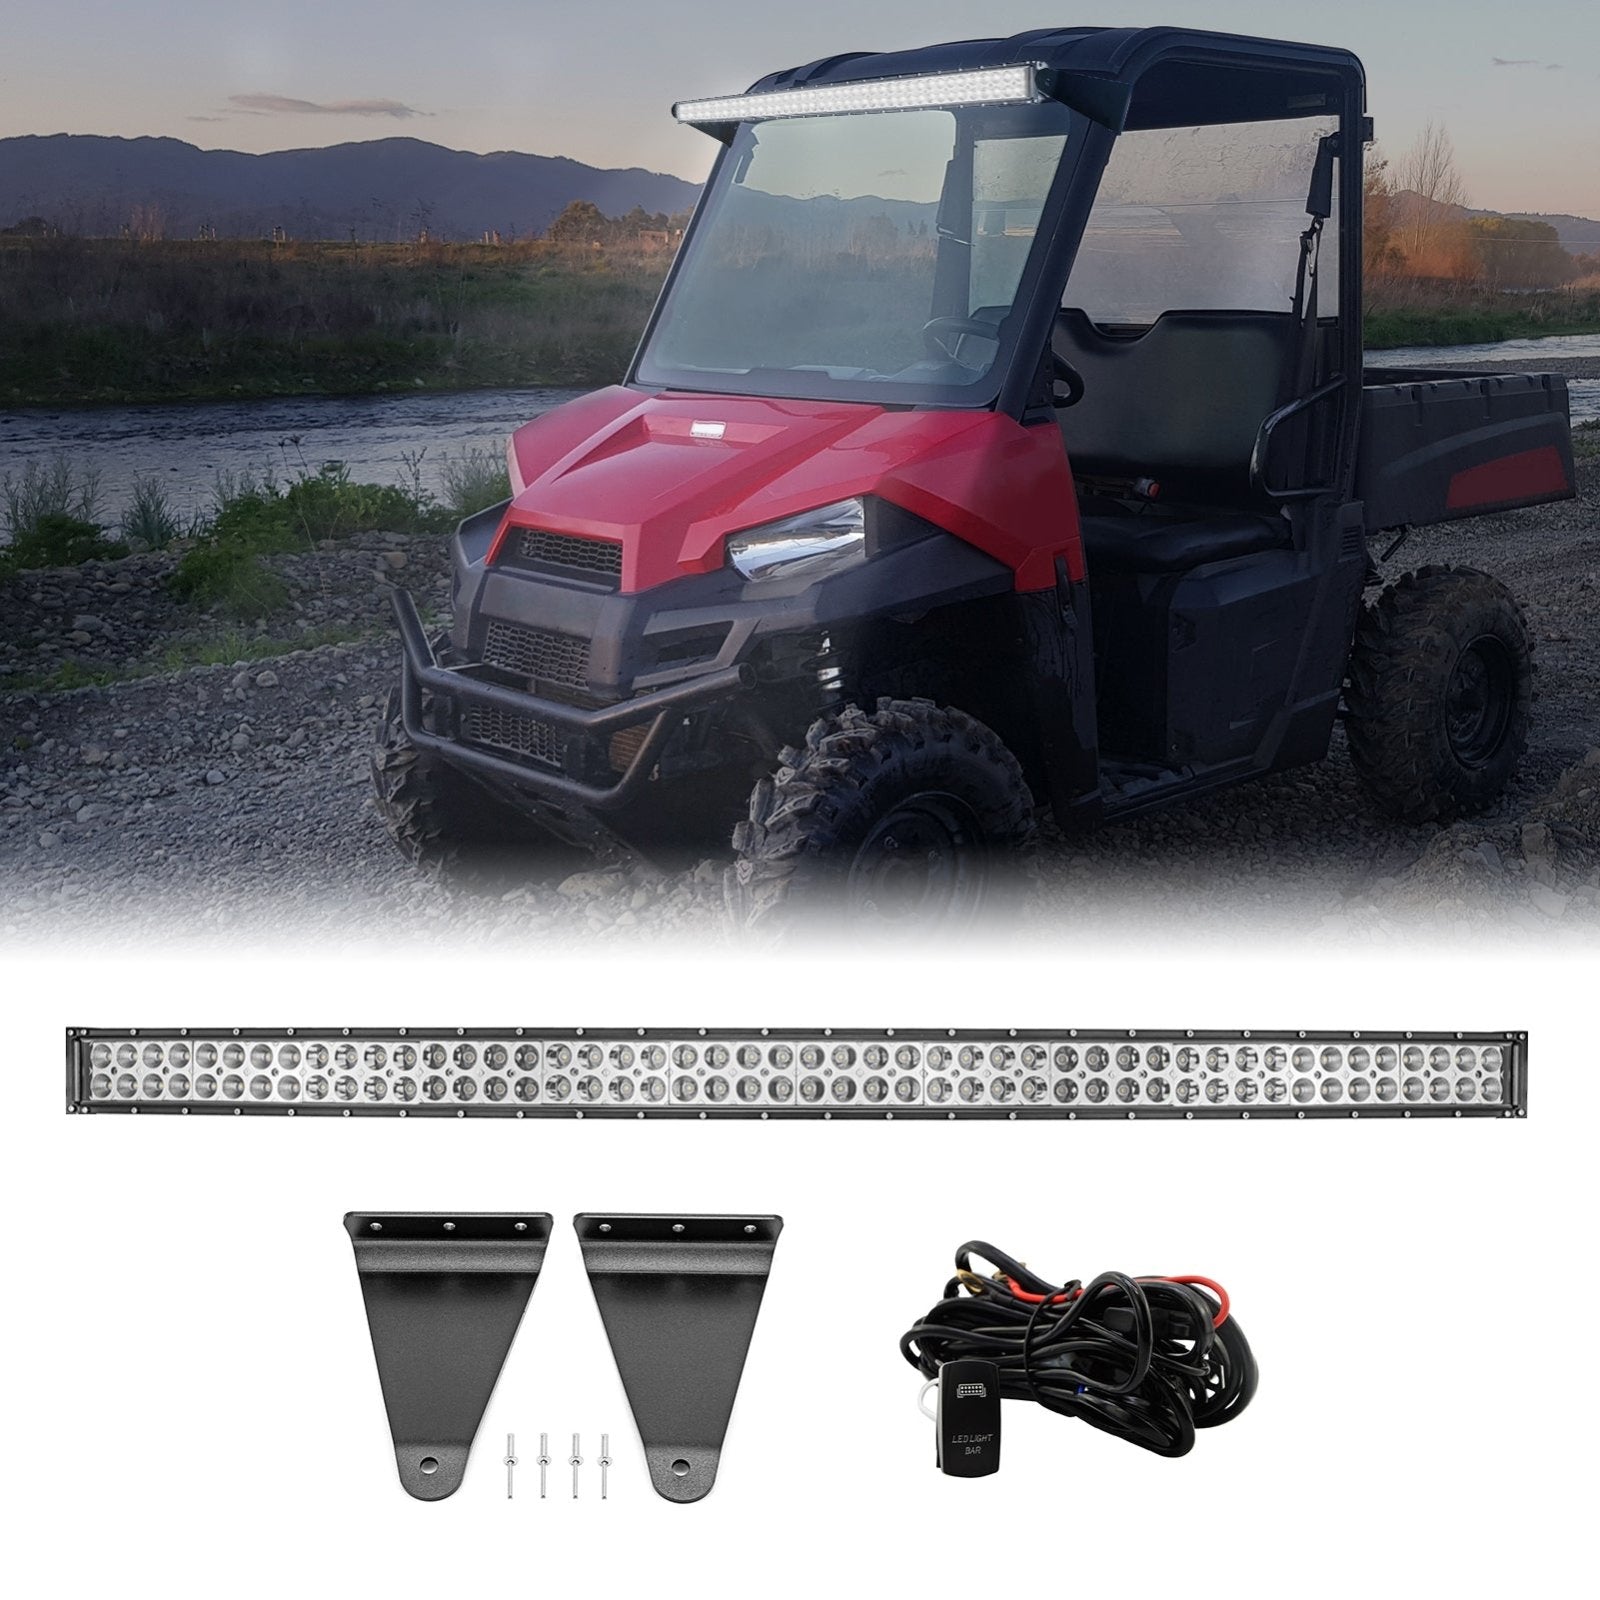 Weisen 300W 52" LED Light Bar Mount Bracket Wire Kit Fits Polaris Ranger 570/900/1000 Fullsize - Weisen